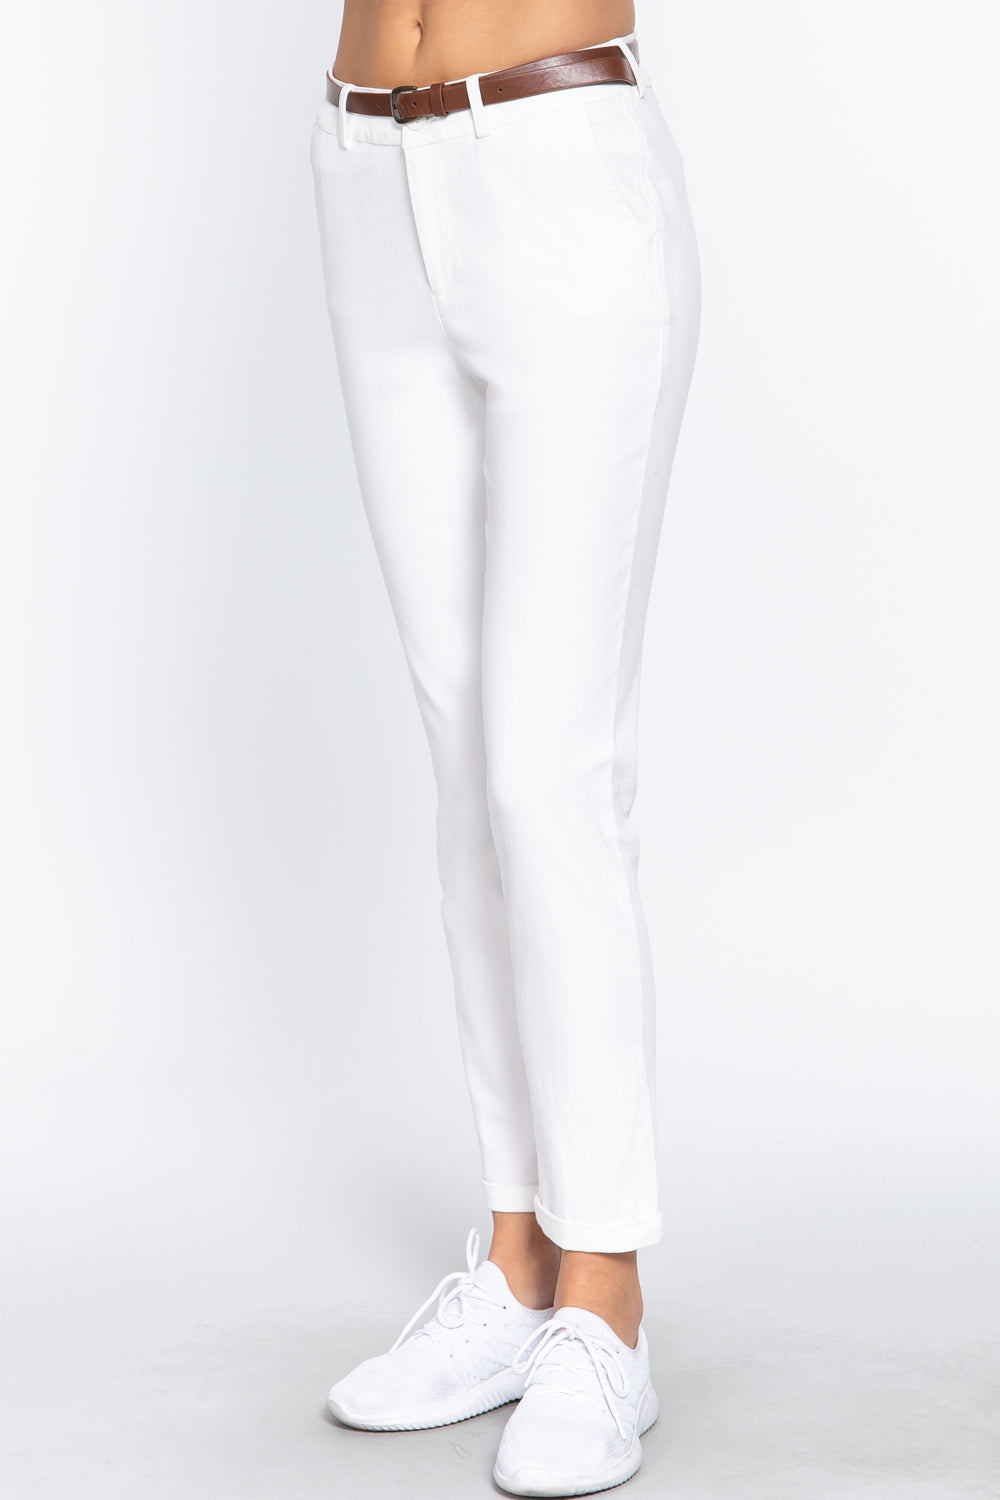 Cotton-span Twill Belted Long Pants - Tigbuls Variety Fashion